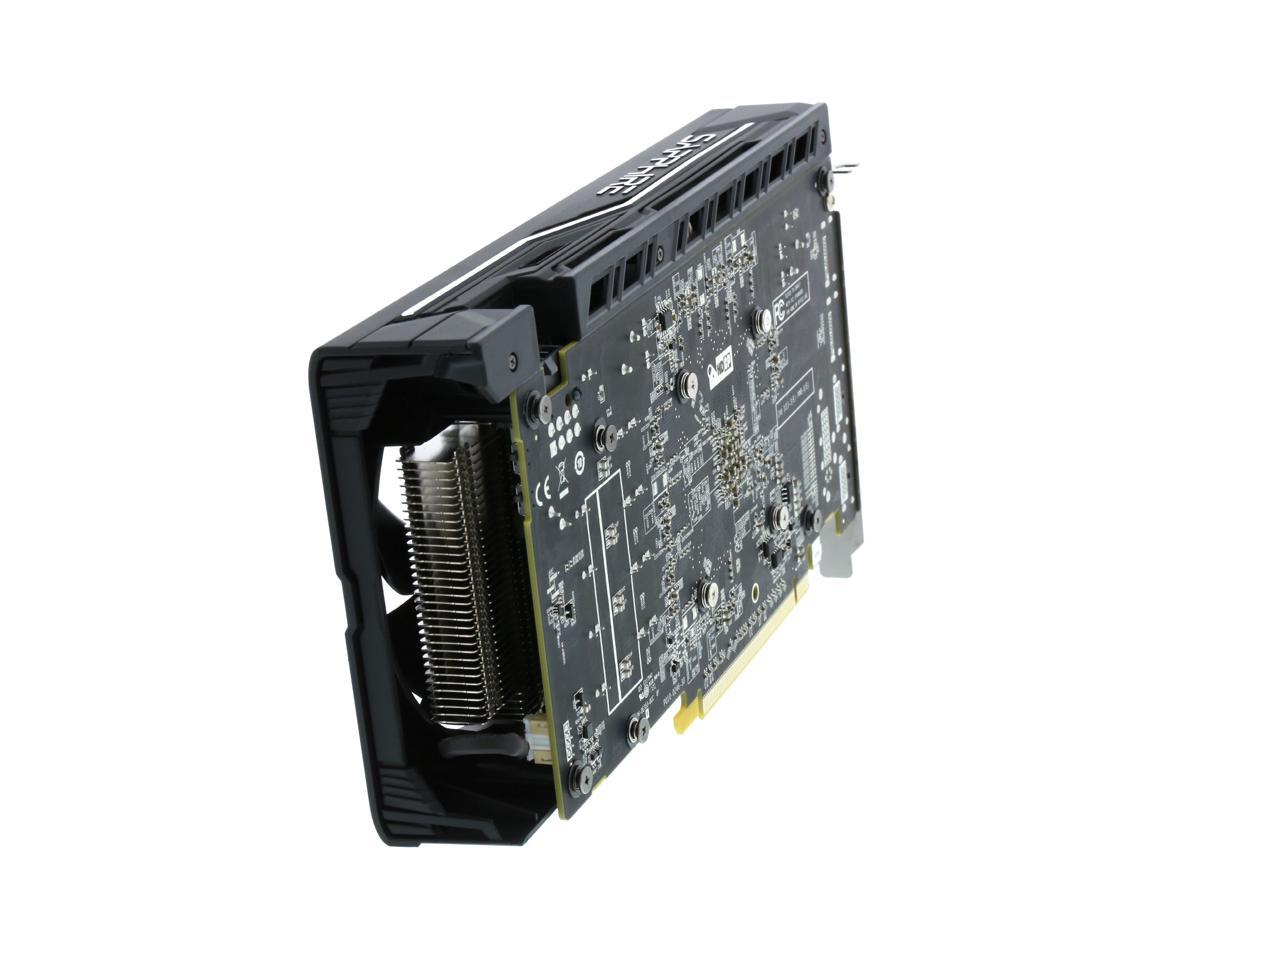 SAPPHIRE Radeon RX 470 Mining Quad (UEFI) (Samsung Memory) Video Card